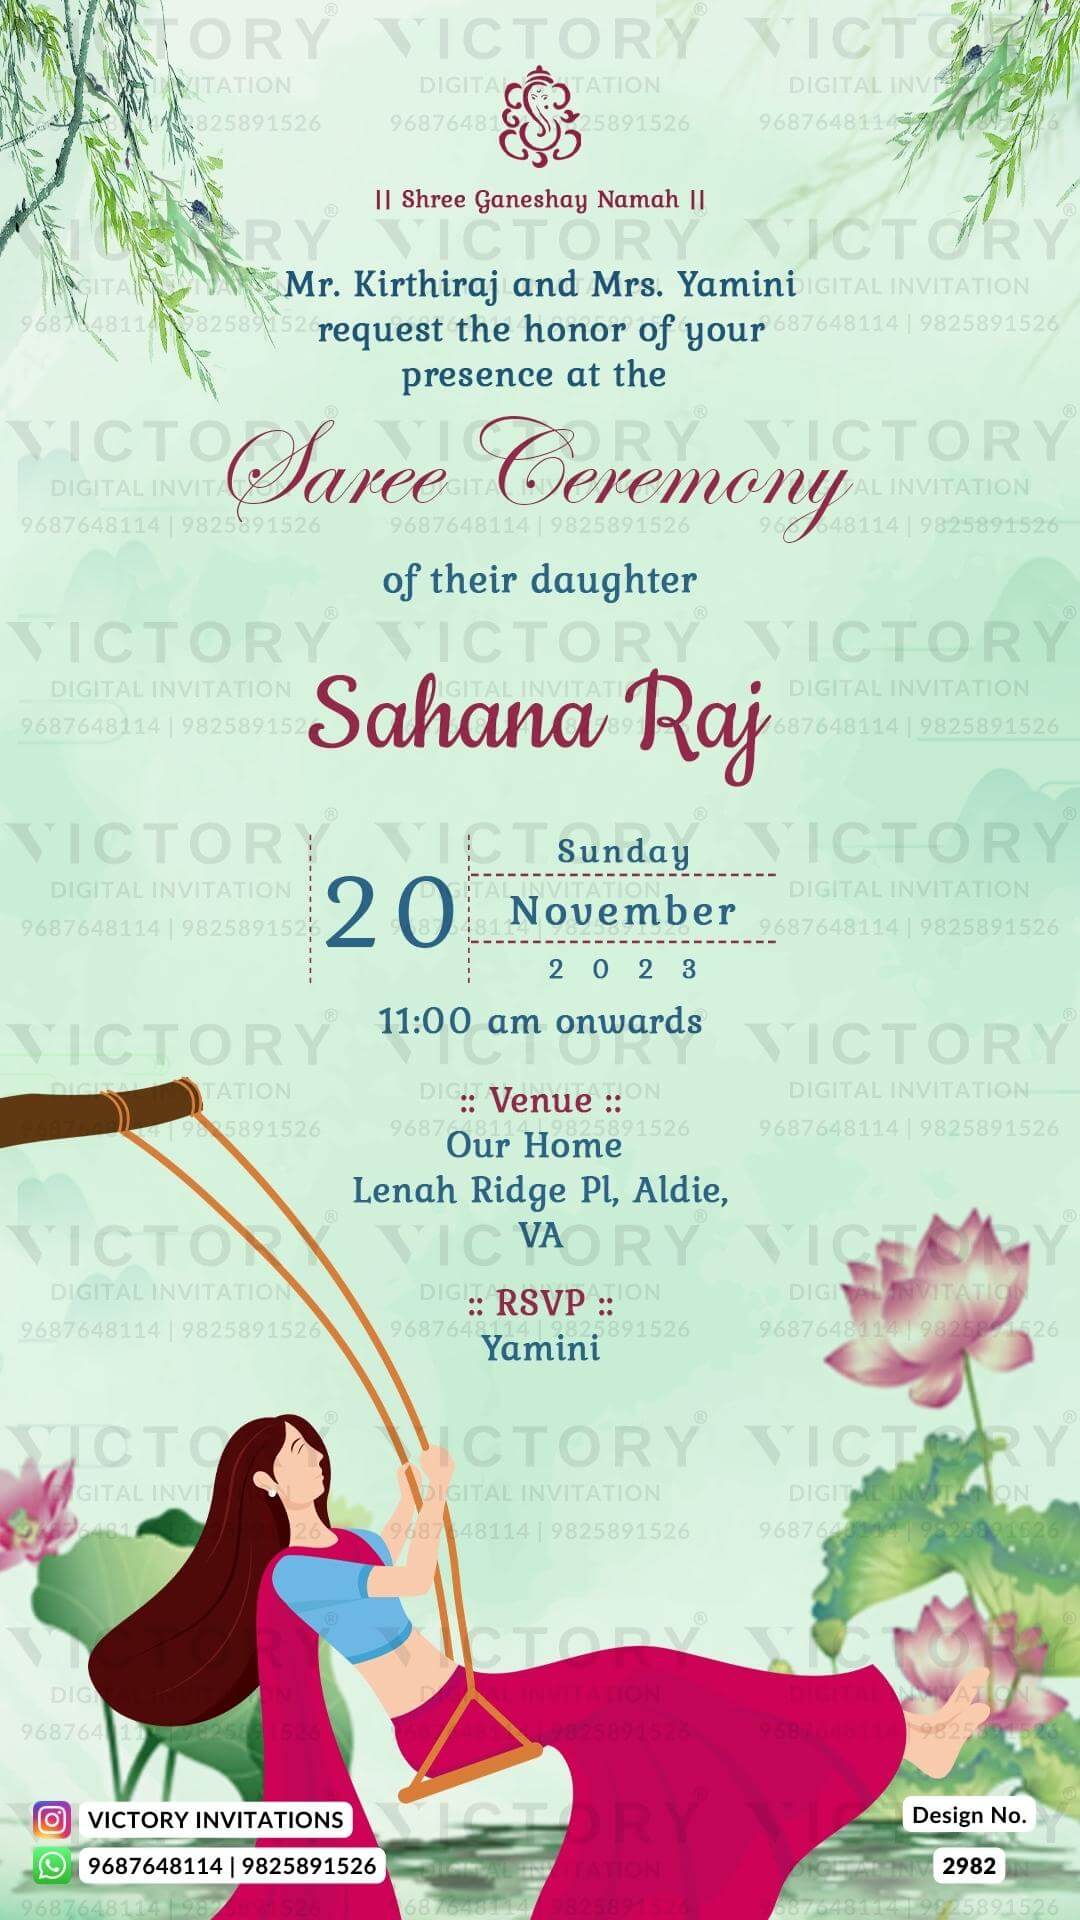 Half Saree Ceremony digital invitation card design no.2982